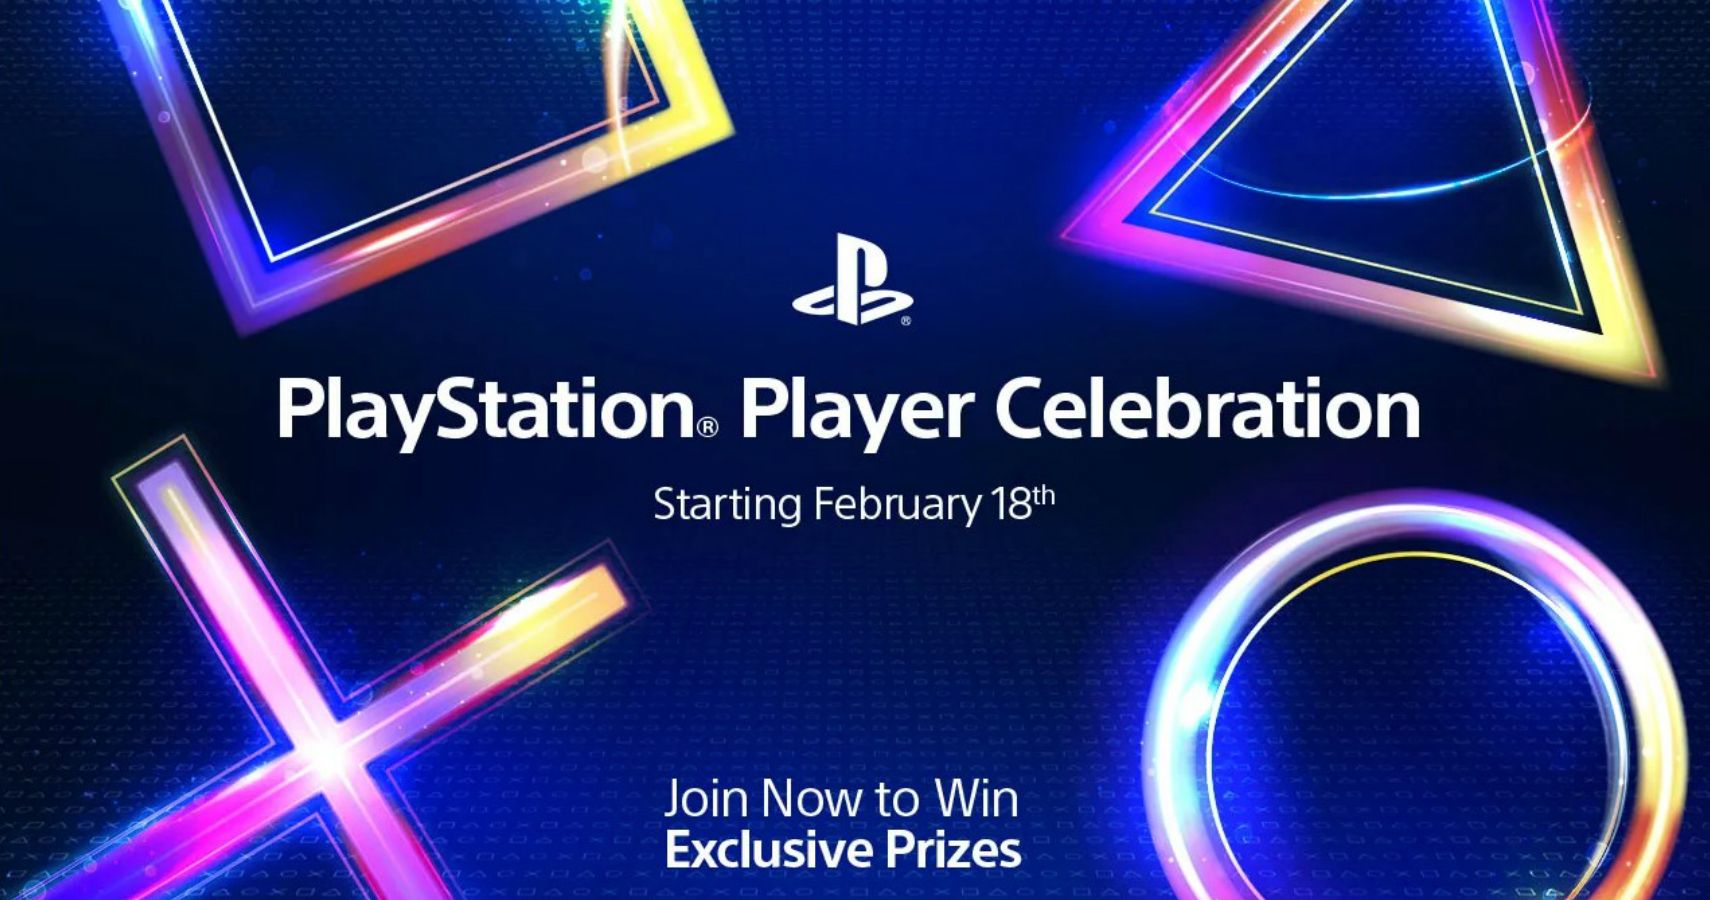 PlayStation Announces Player Celebration Event & Prizes